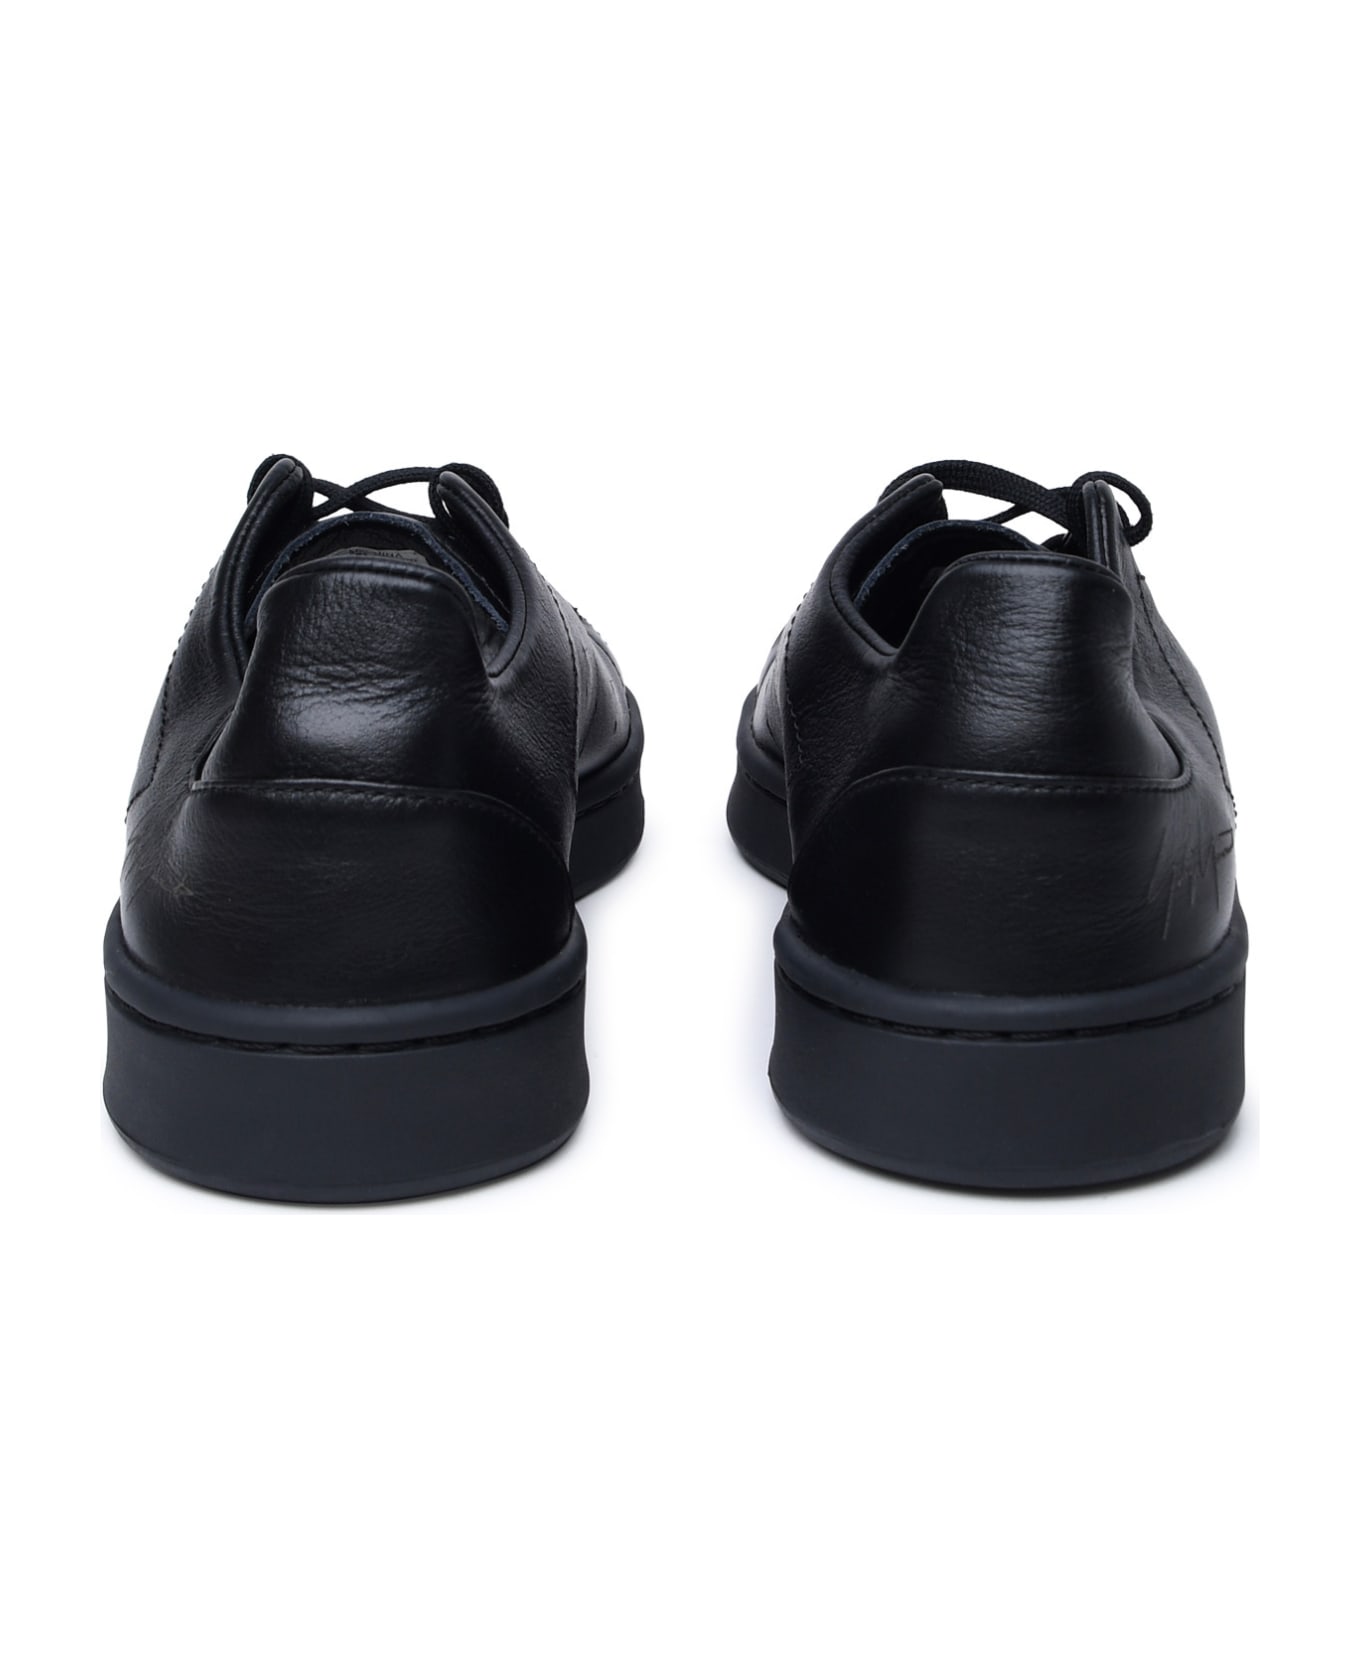 Y-3 Stan Smith Sneakers - BLACKBLACKBLACK